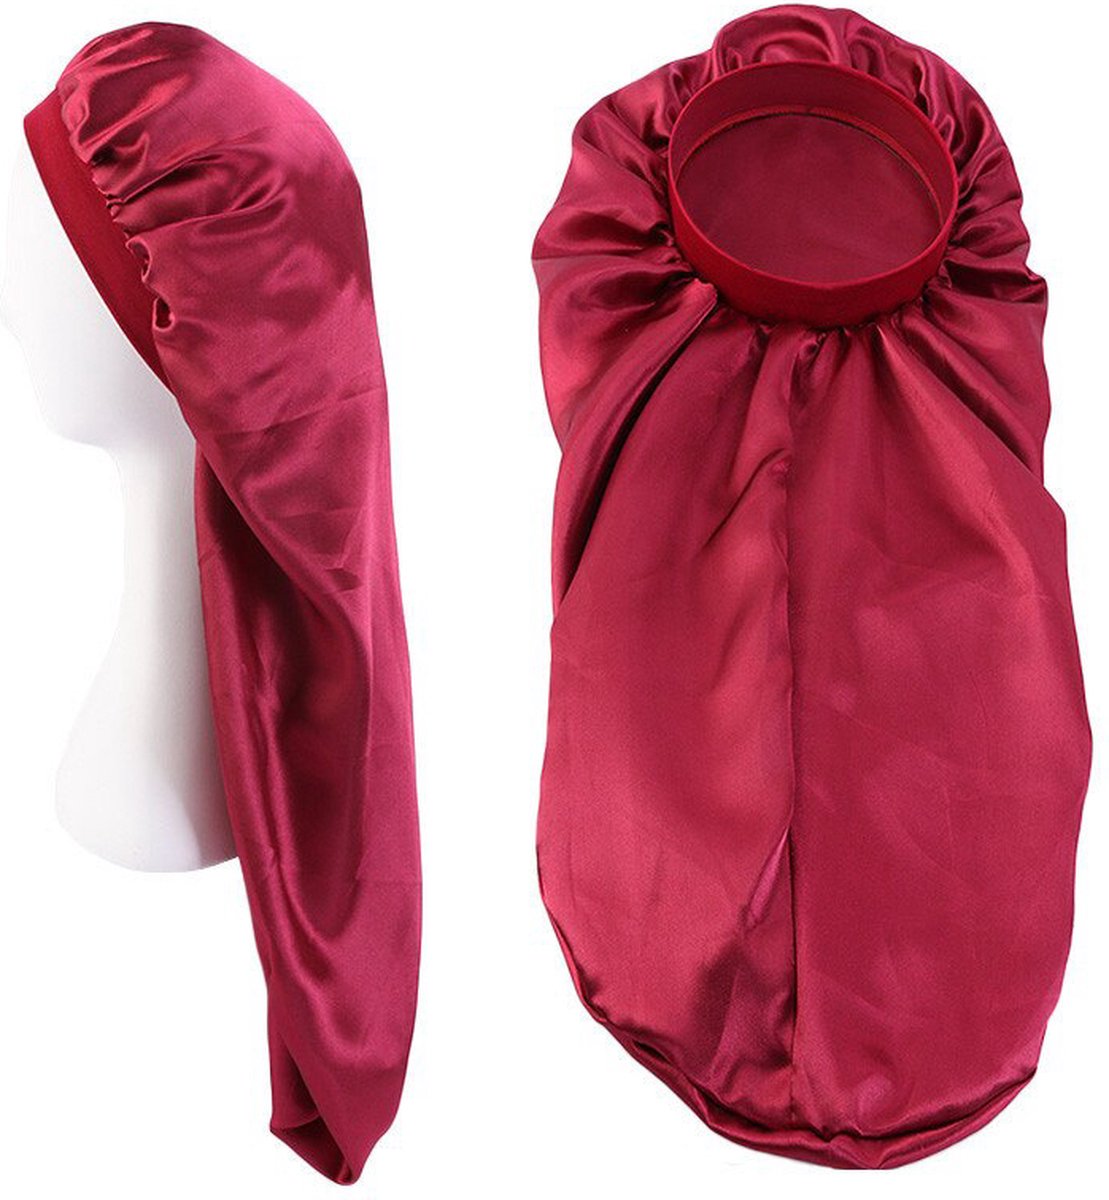 Satijnen Bonnet voor Dreadlocks / Braids / Rasta AfricanFabs® - Rode Dreadsock / Satijnen Slaapmuts / Hair Bonnet